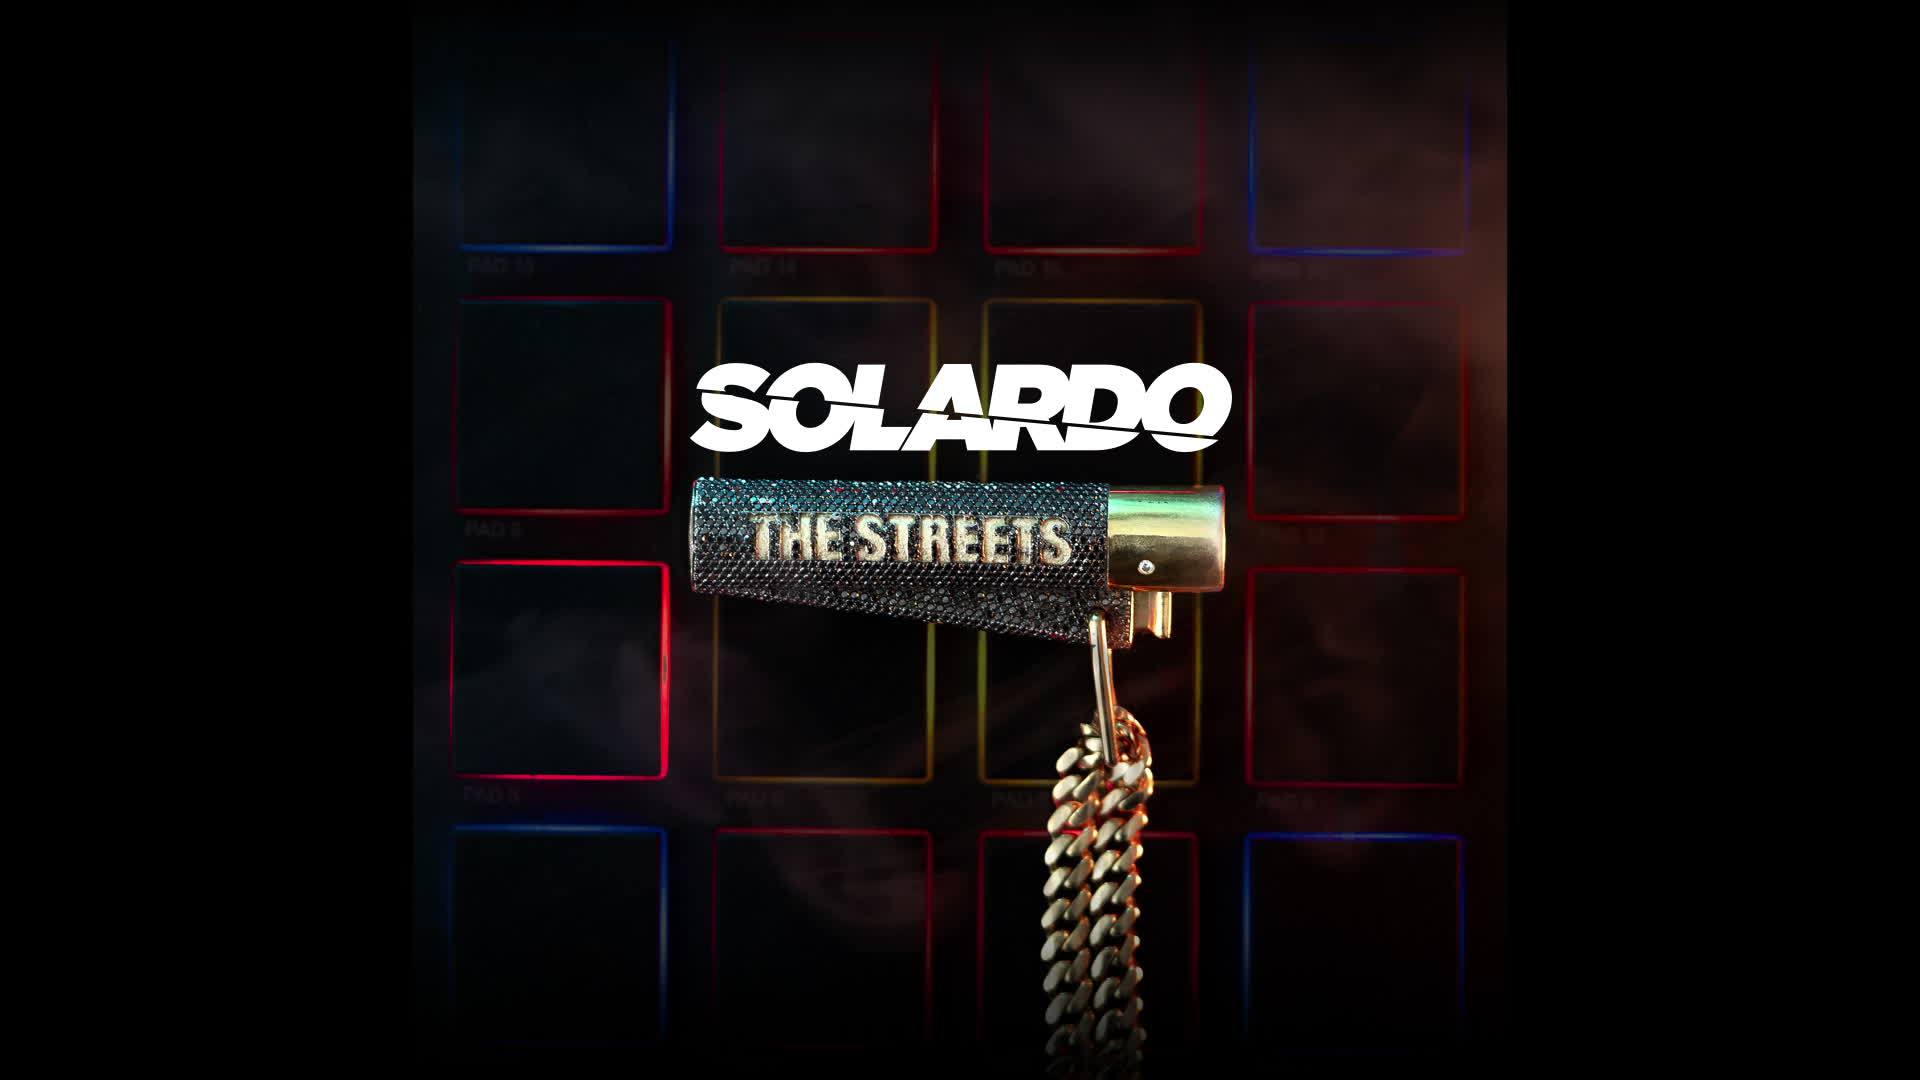 The Streets - Who's Got The Bag (Solardo Remix / Audio)